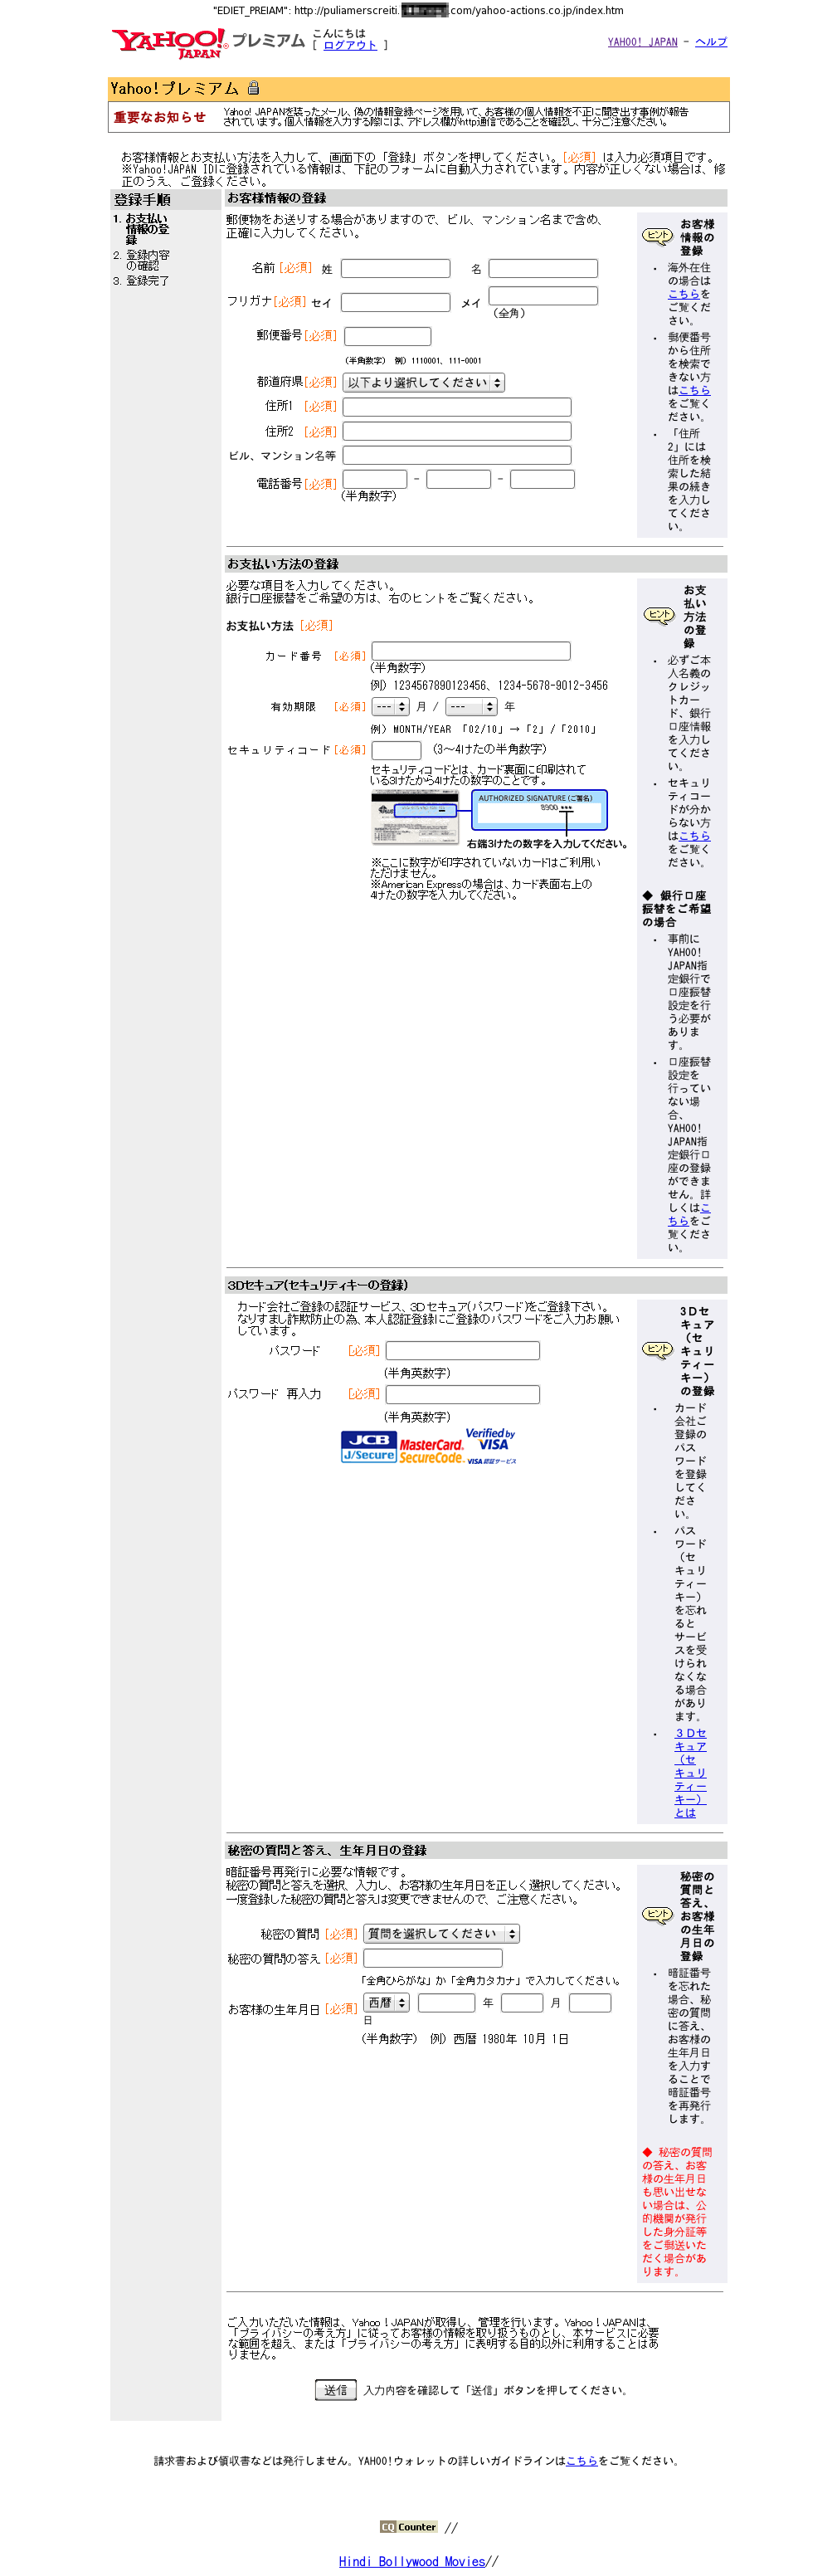 Yahoo! JAPANをかたるフィッシング1(2009/10/16)